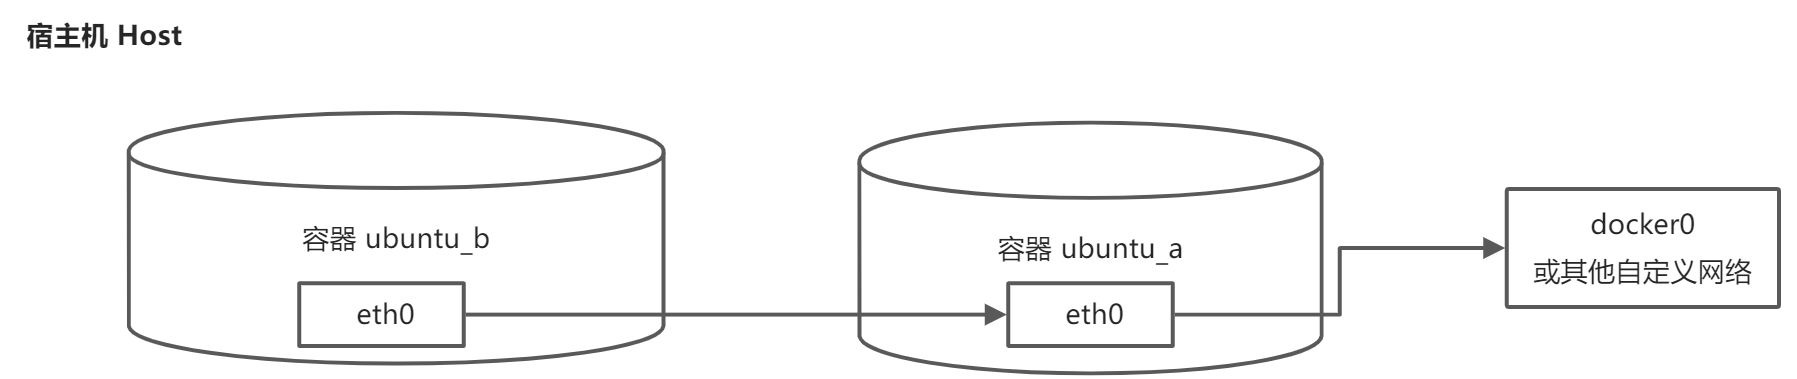 Docker有几种网络通信模型 - 图3